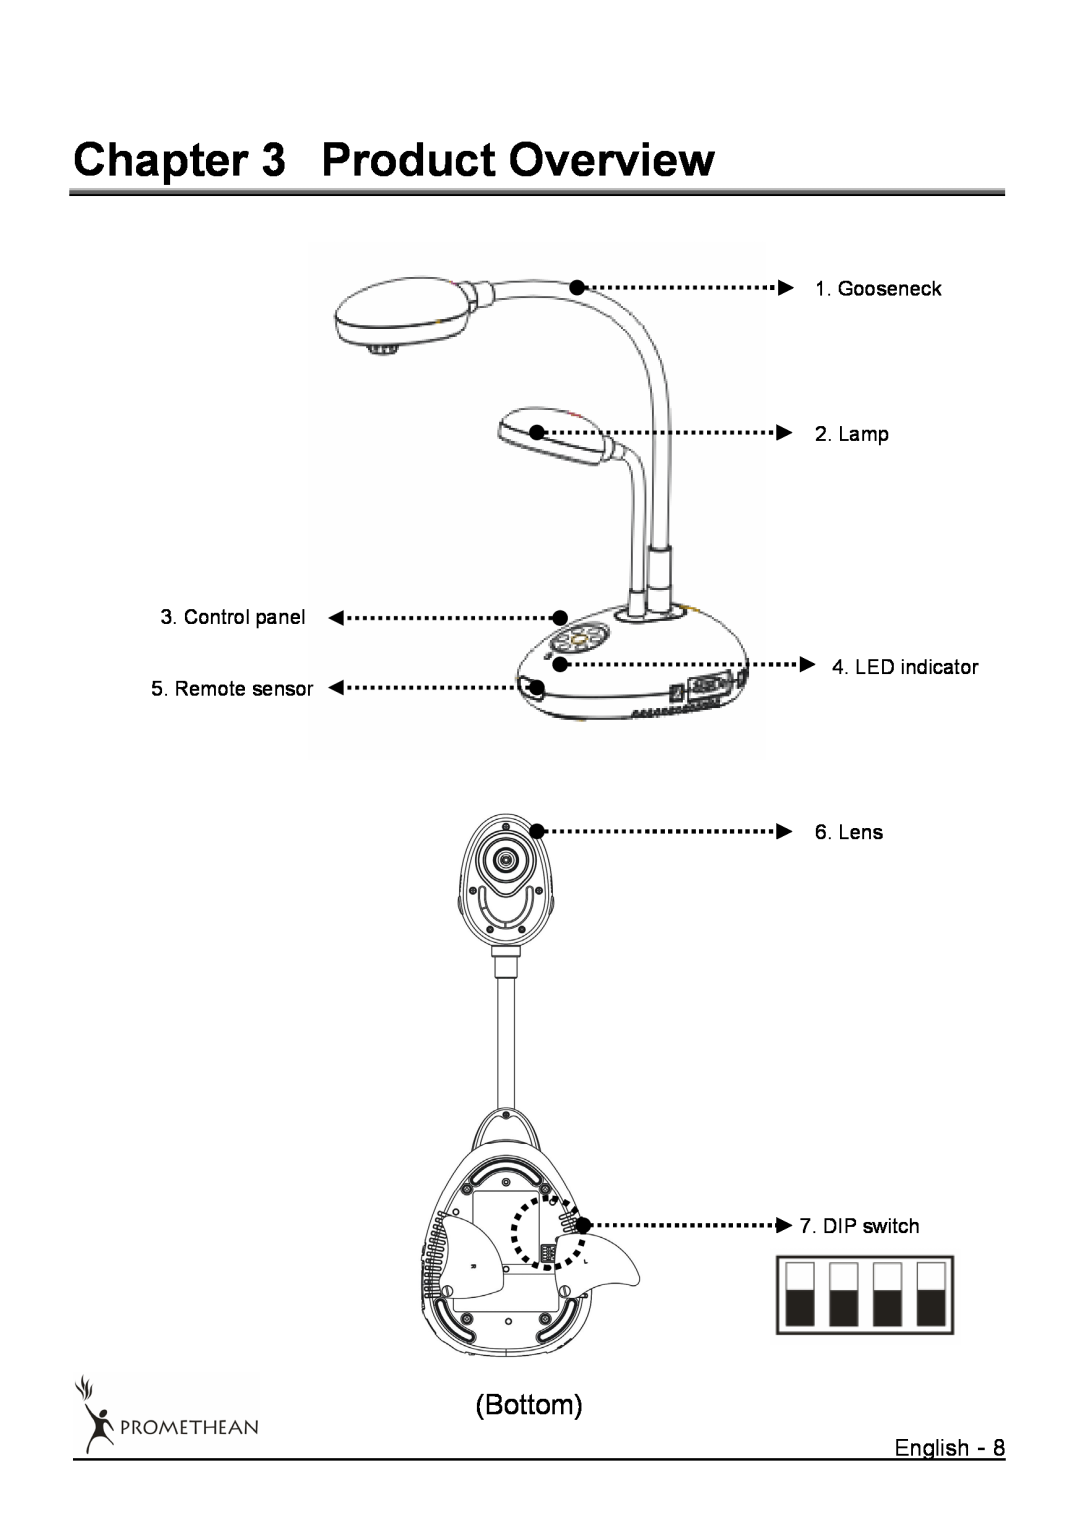 Promethean 322 Product Overview, Bottom, Gooseneck 2. Lamp 3. Control panel, LED indicator 5. Remote sensor 6. Lens 